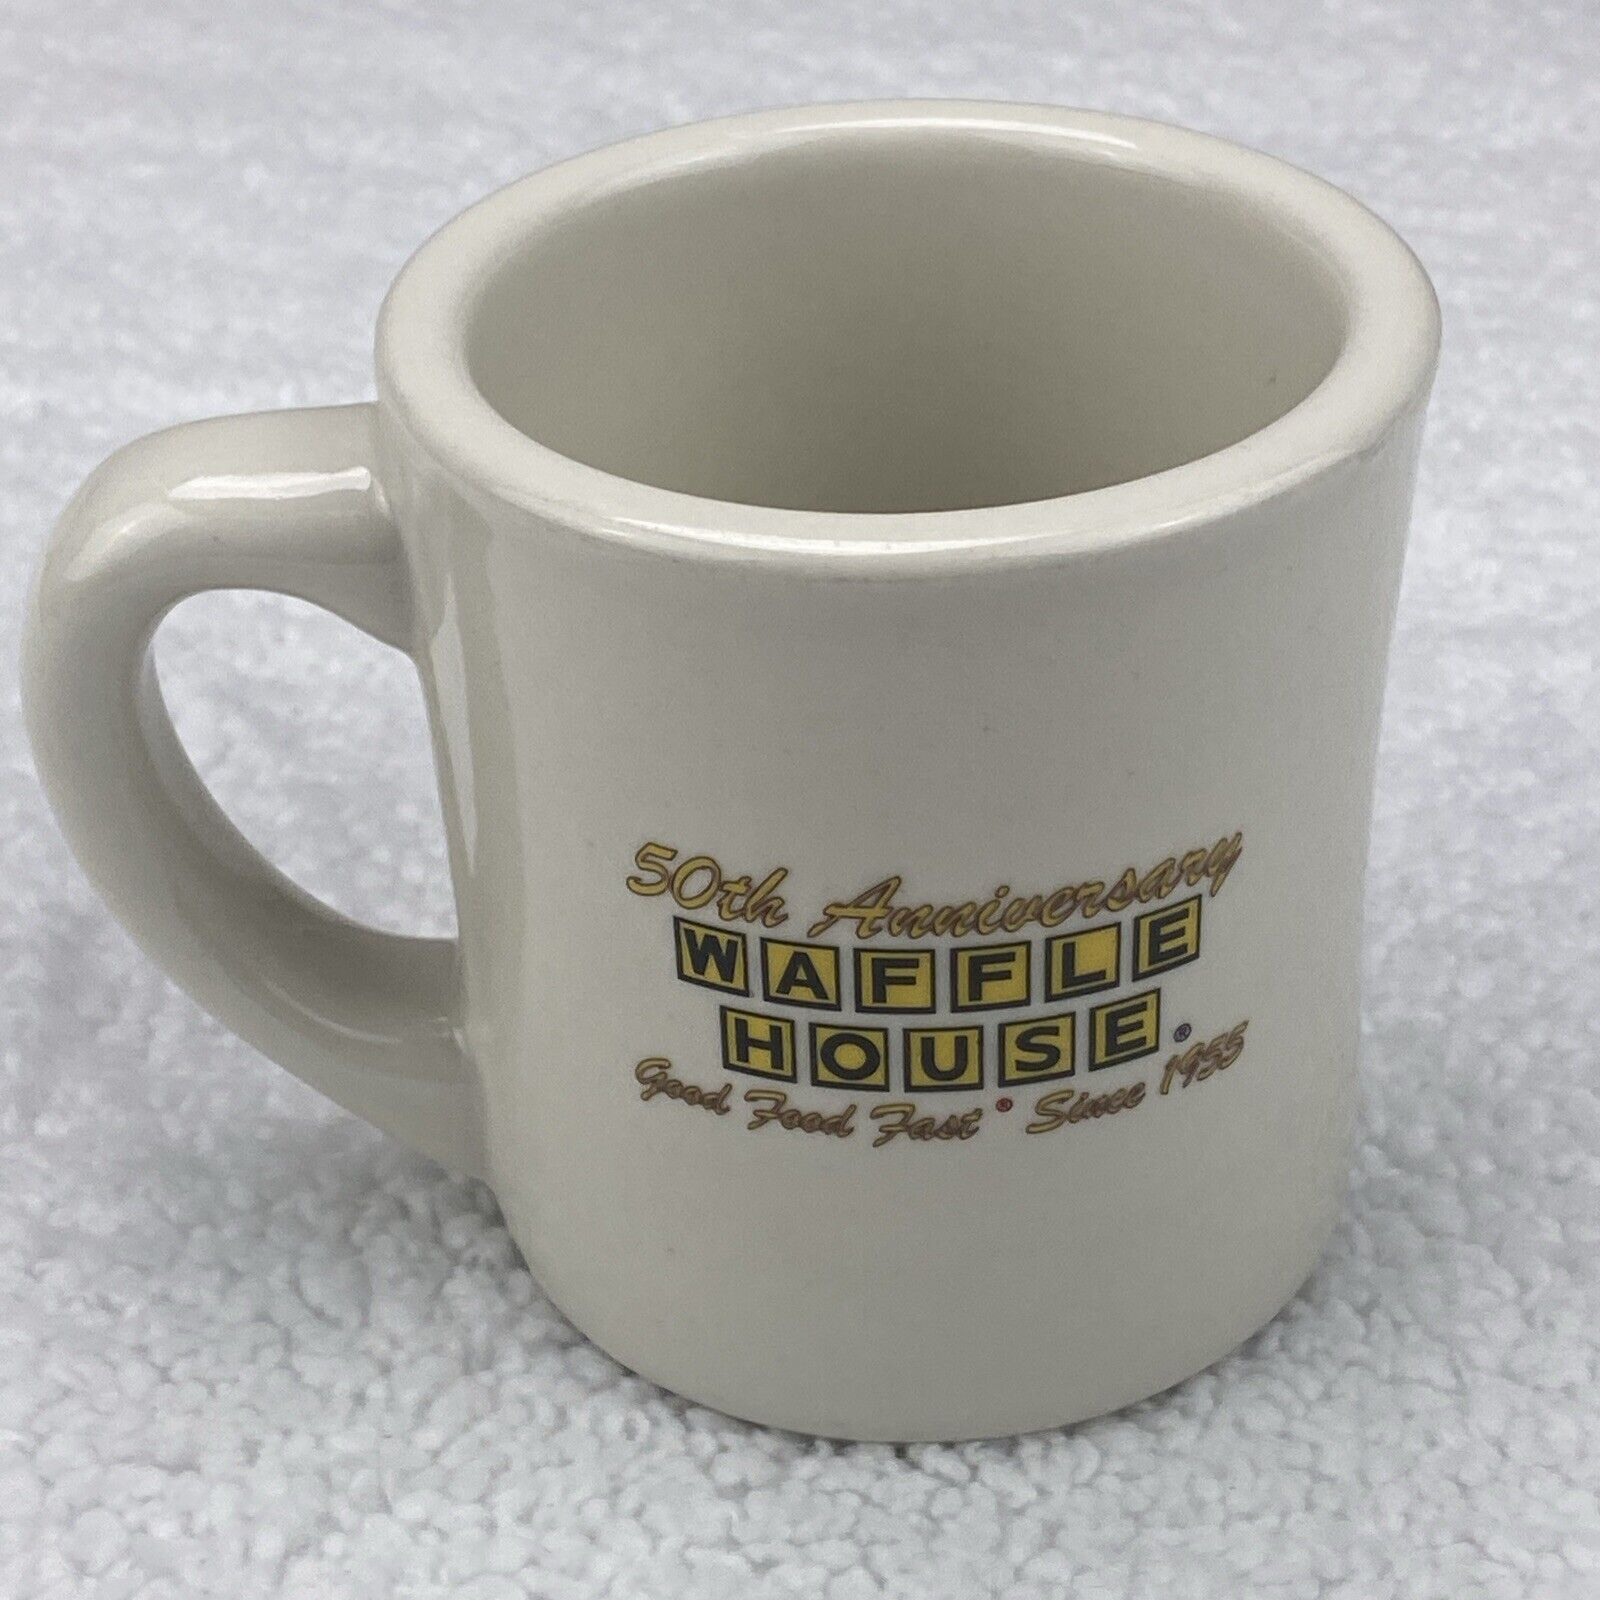 50th Anniversary Waffle House Ceramic Resturant Coffee Mug By Tuxton